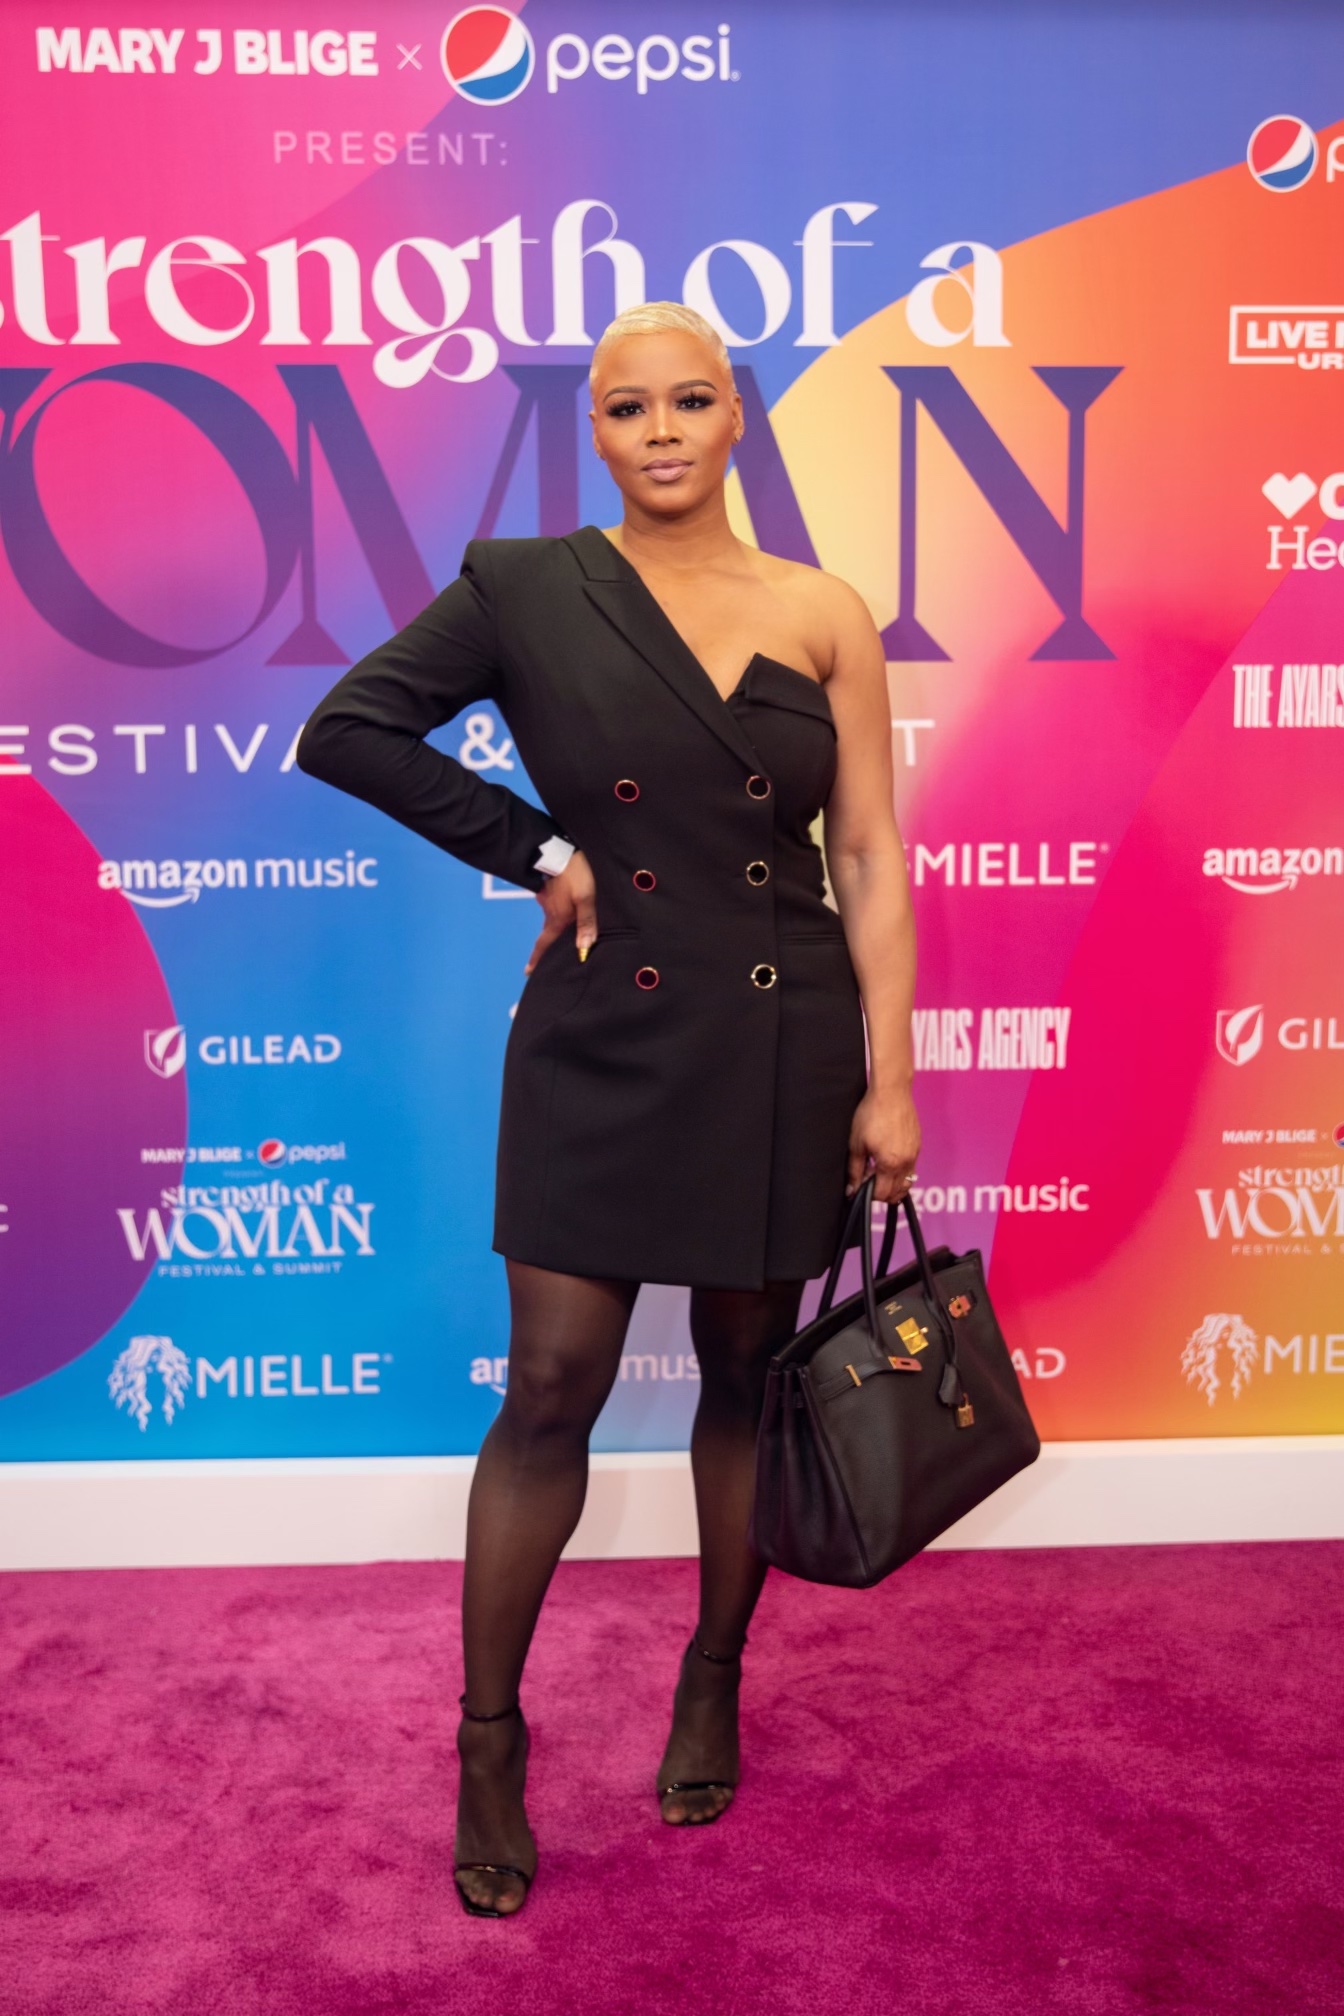 Misa Hylton On Styling Mary J. Blige & Her Most Fashionable Music